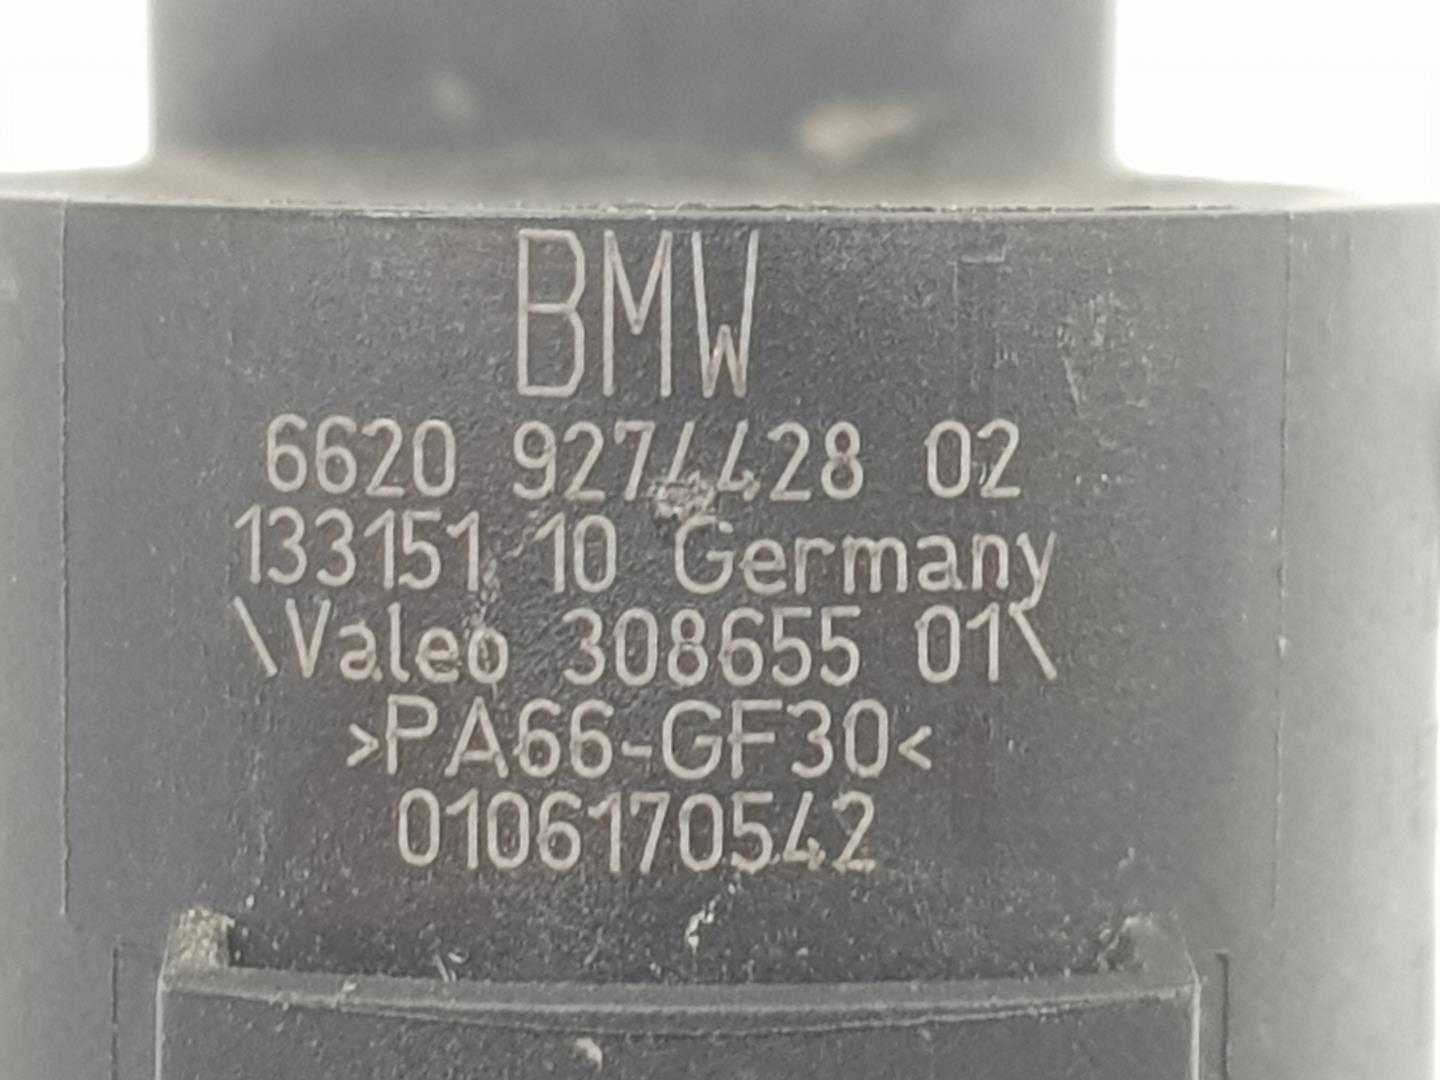 BMW 2 Series Active Tourer F45 (2014-2018) Front Parking Sensor 66209274428, 9274428 24154942